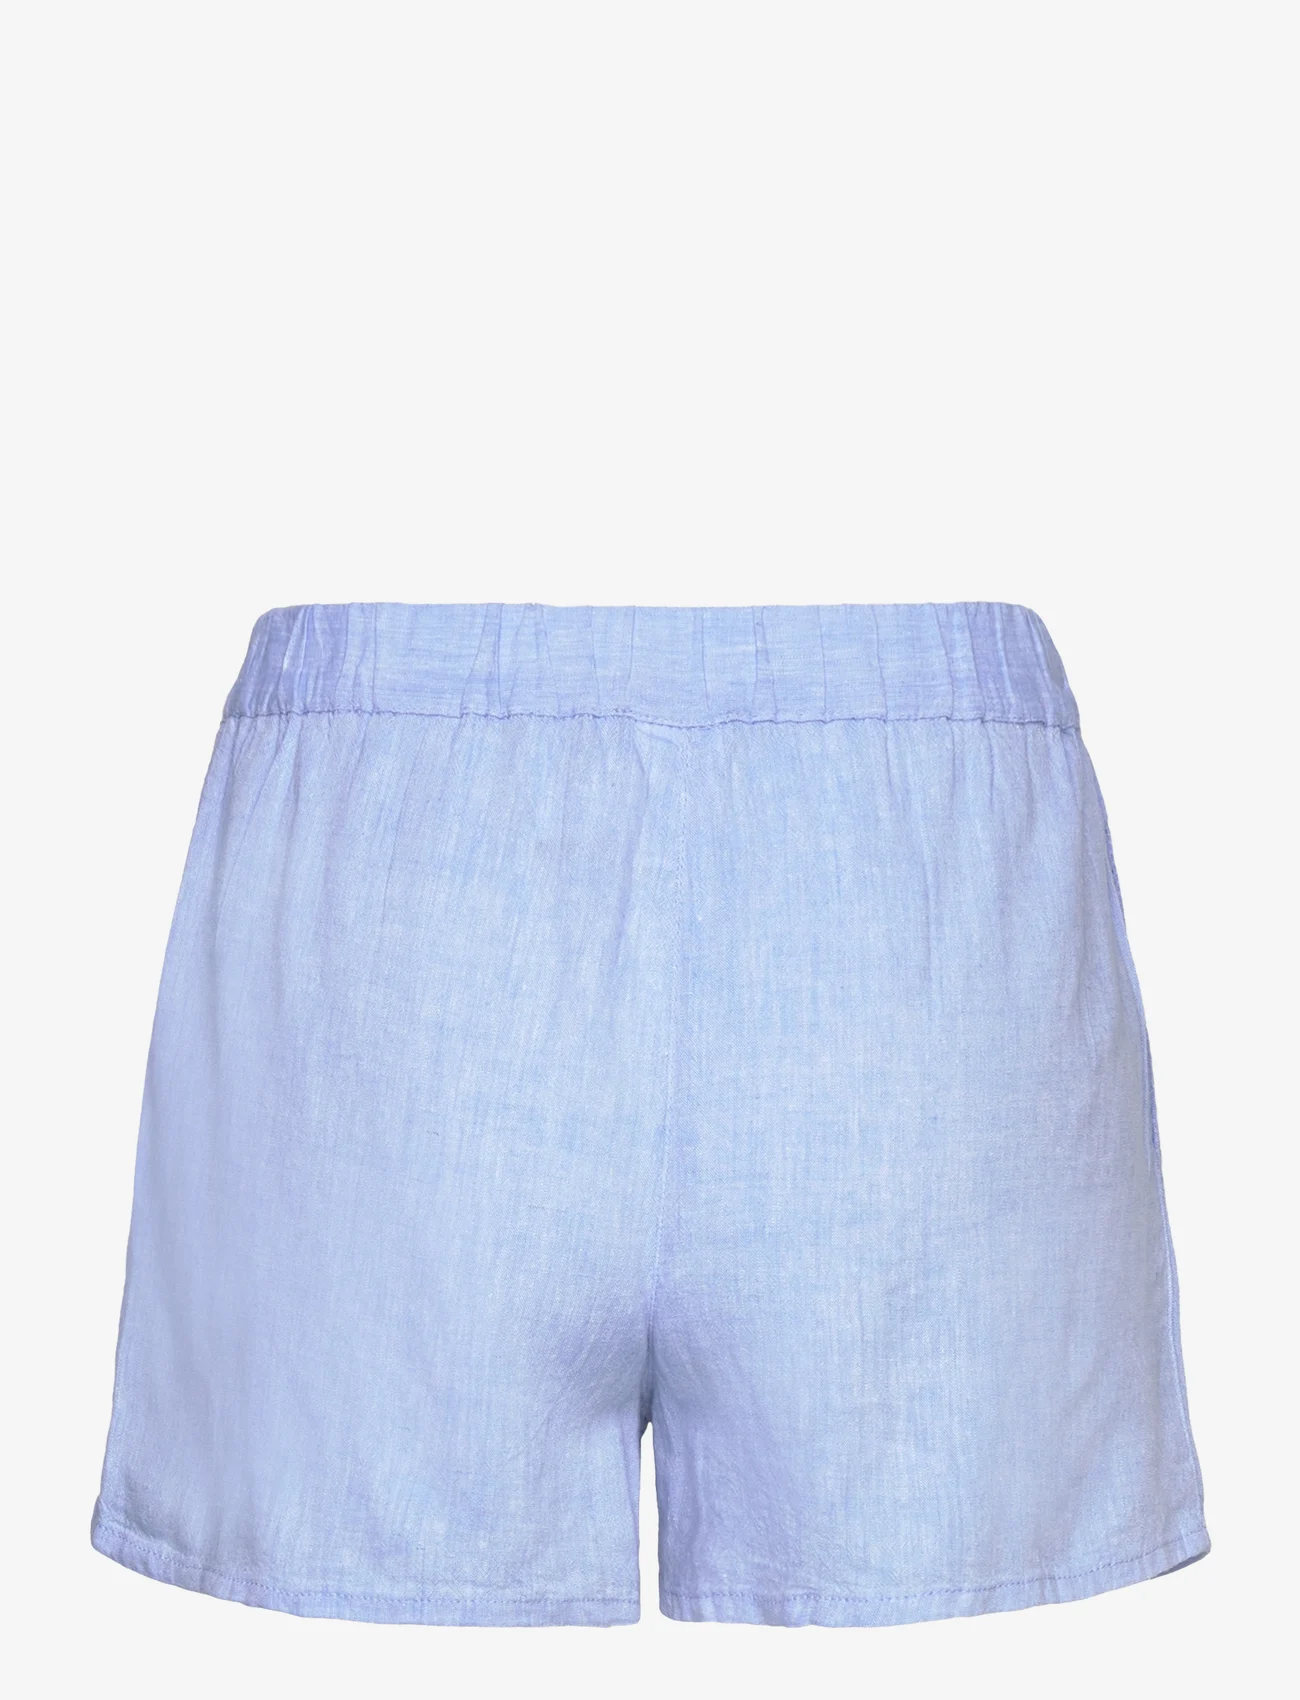 Etam - Justine - Short pyjama bottom - lowest prices - sky blue - 1